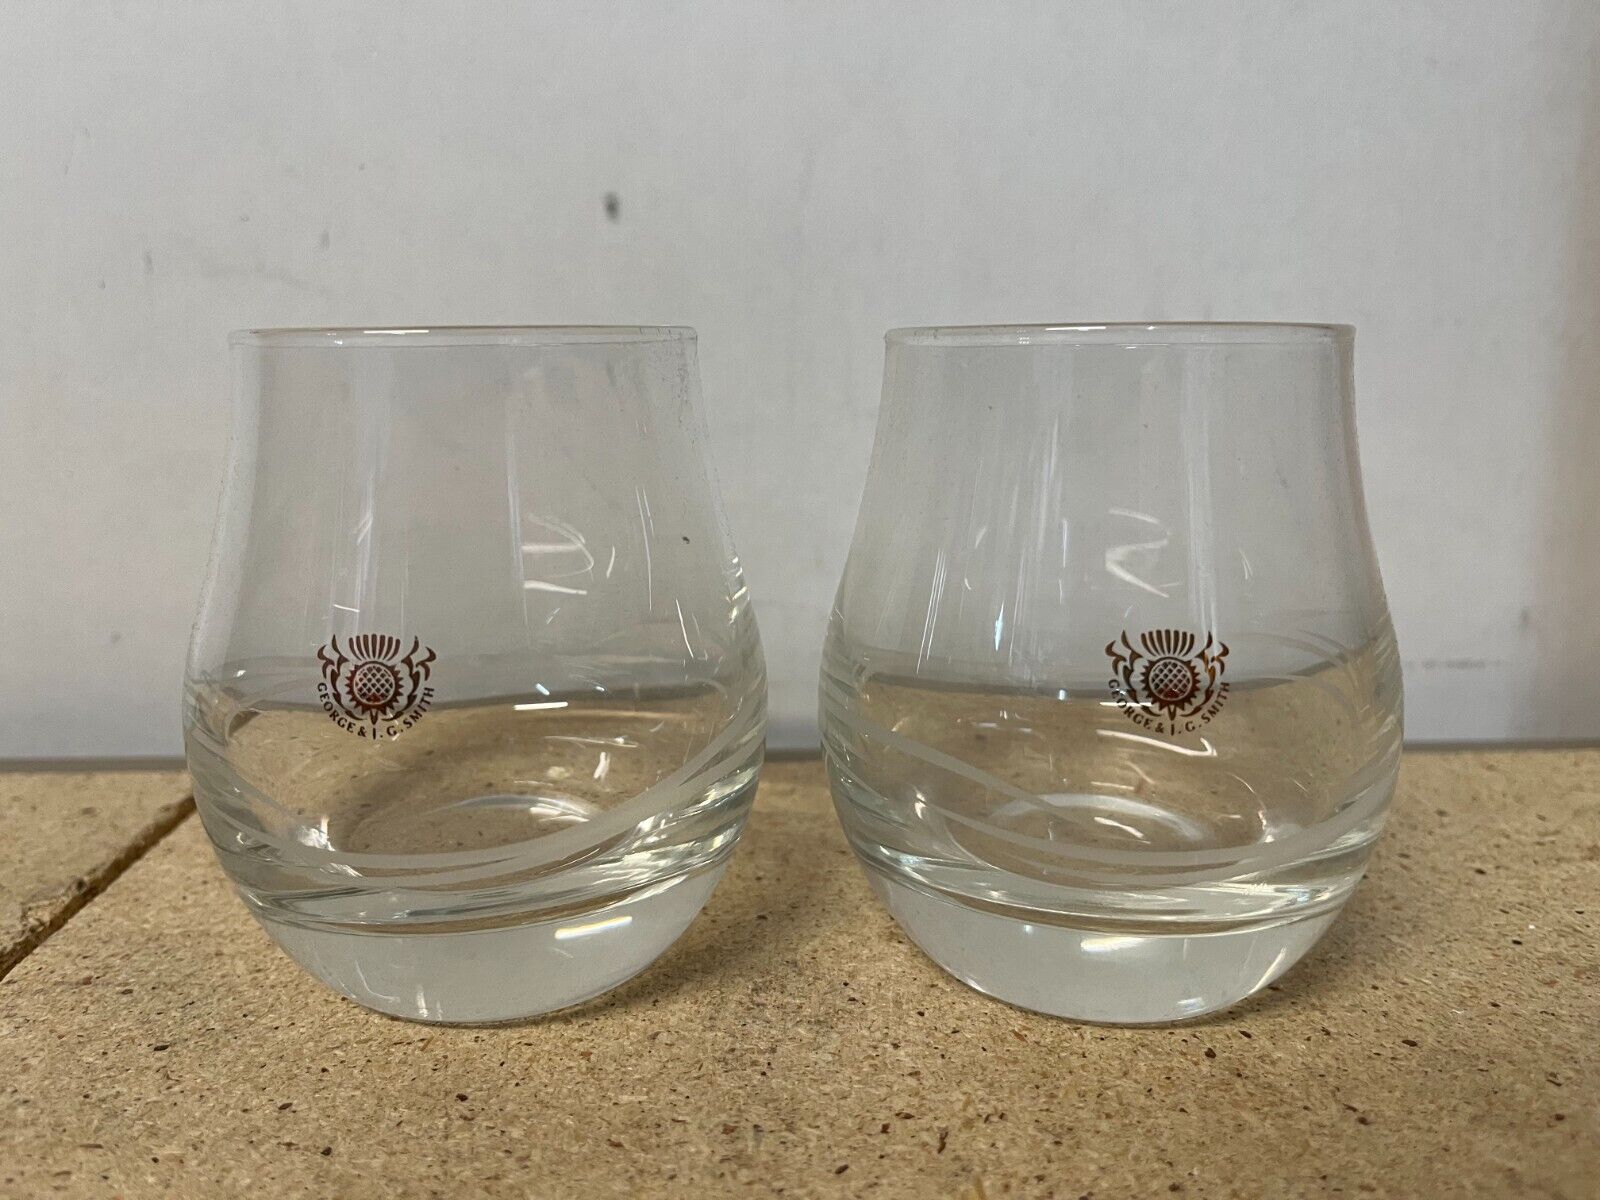 THE GLENLIVET George & JG Smith Scotch Whiskey Tulip Snifter Glasses Set Of 2